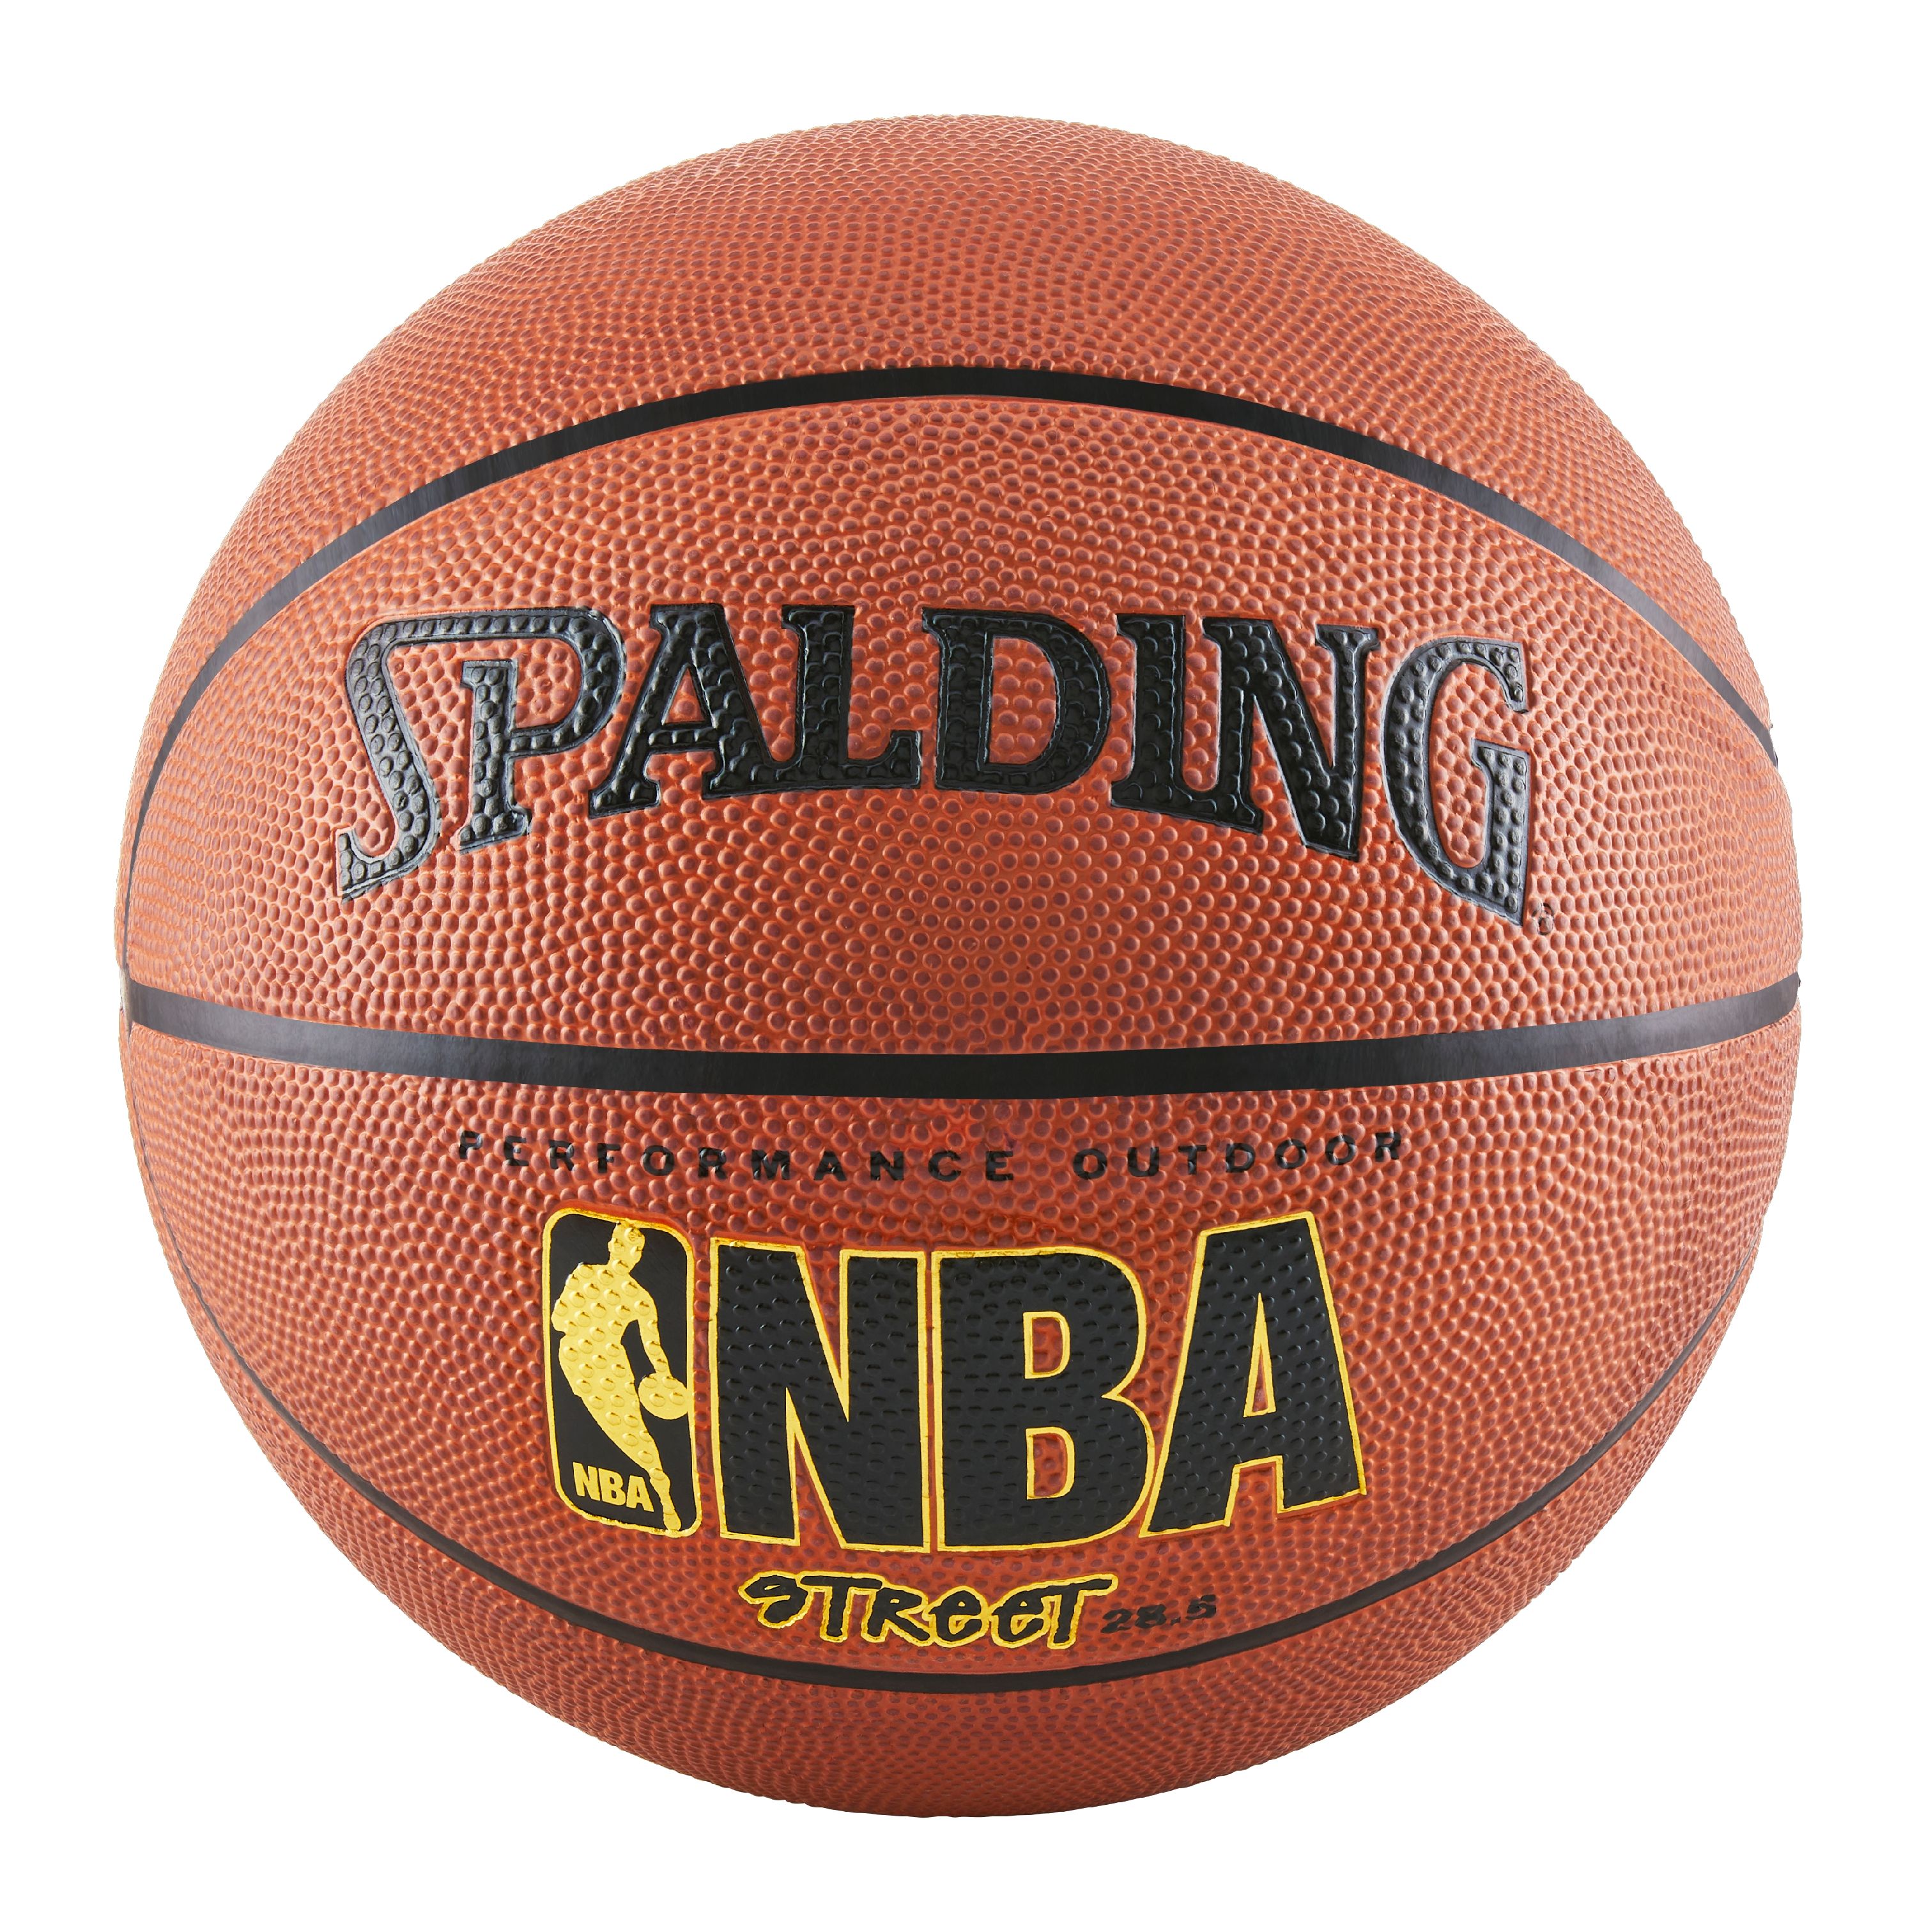 Spalding NBA Street Outdoor Basketball, Intermediate Size 6 (28.5?) - image 1 of 4